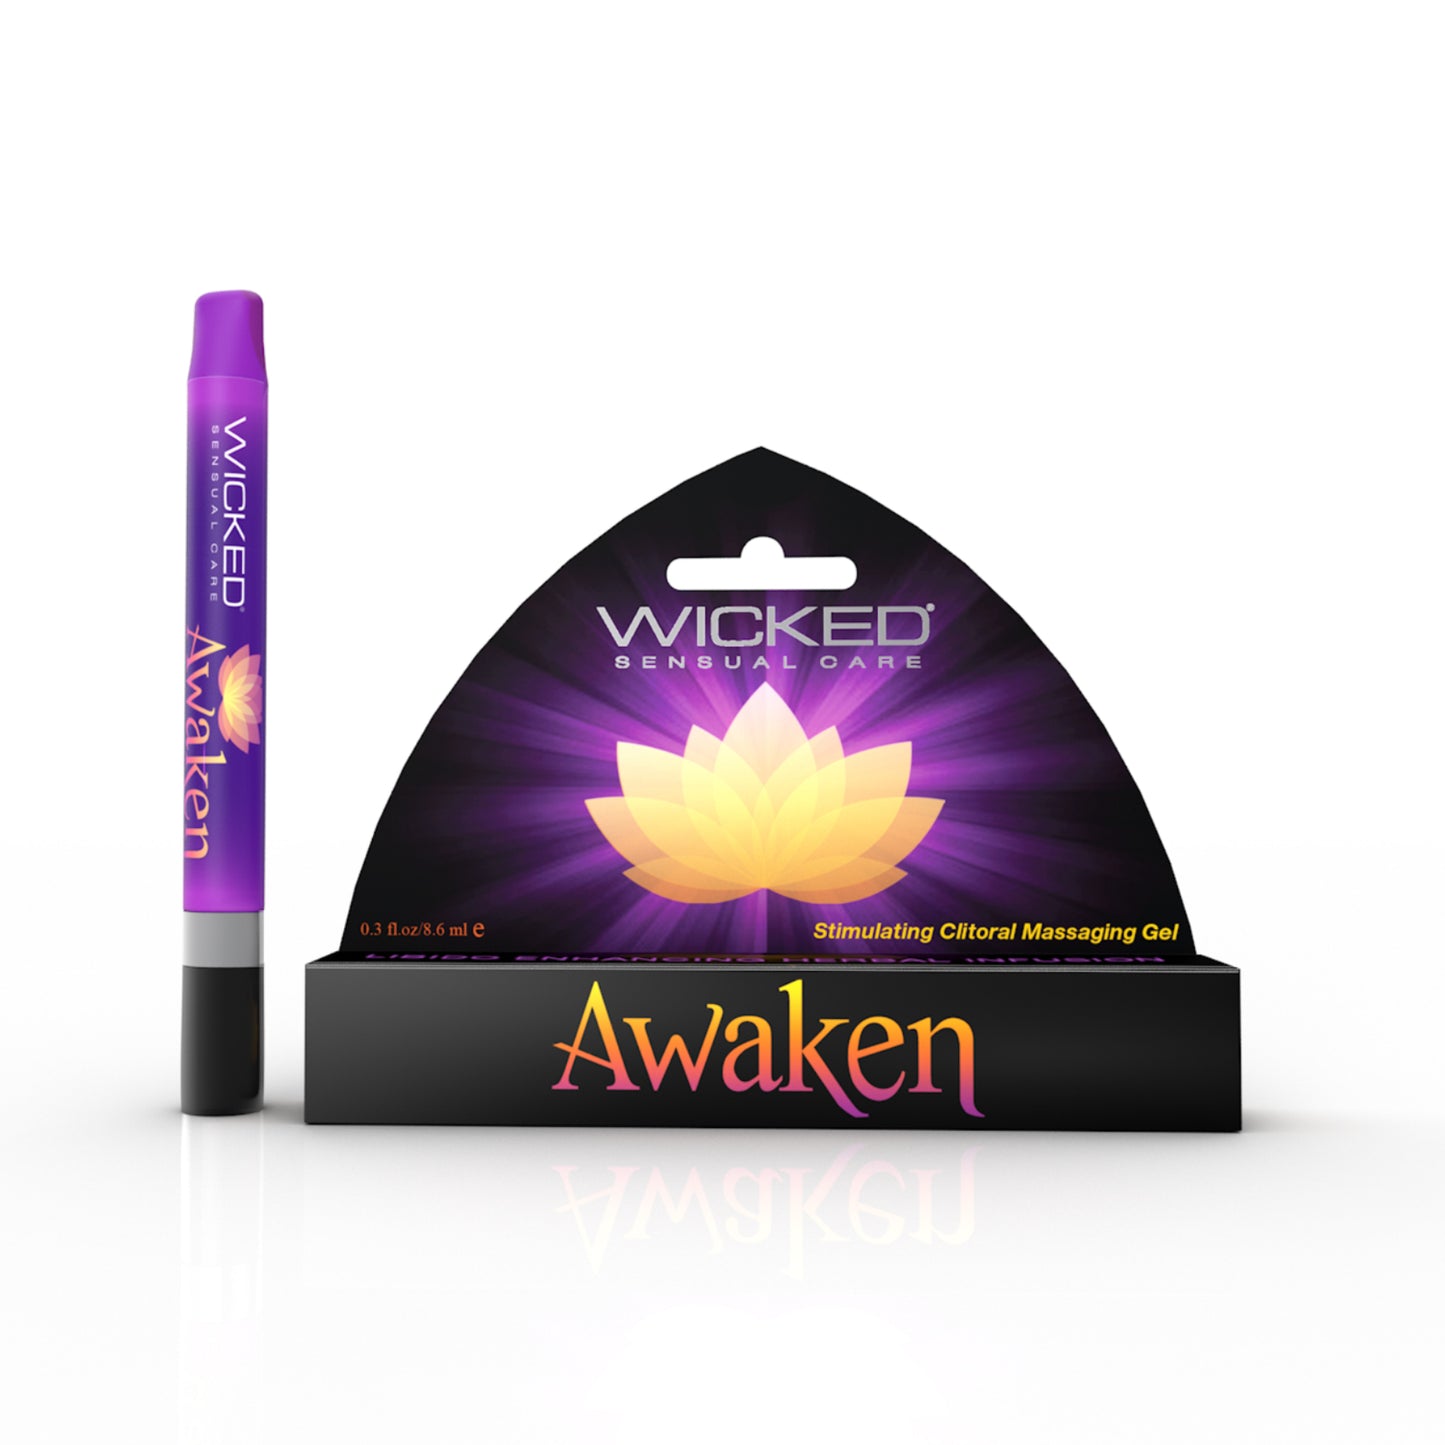 Wicked - Stimulating Clitoral Massaging Gel | Awaken